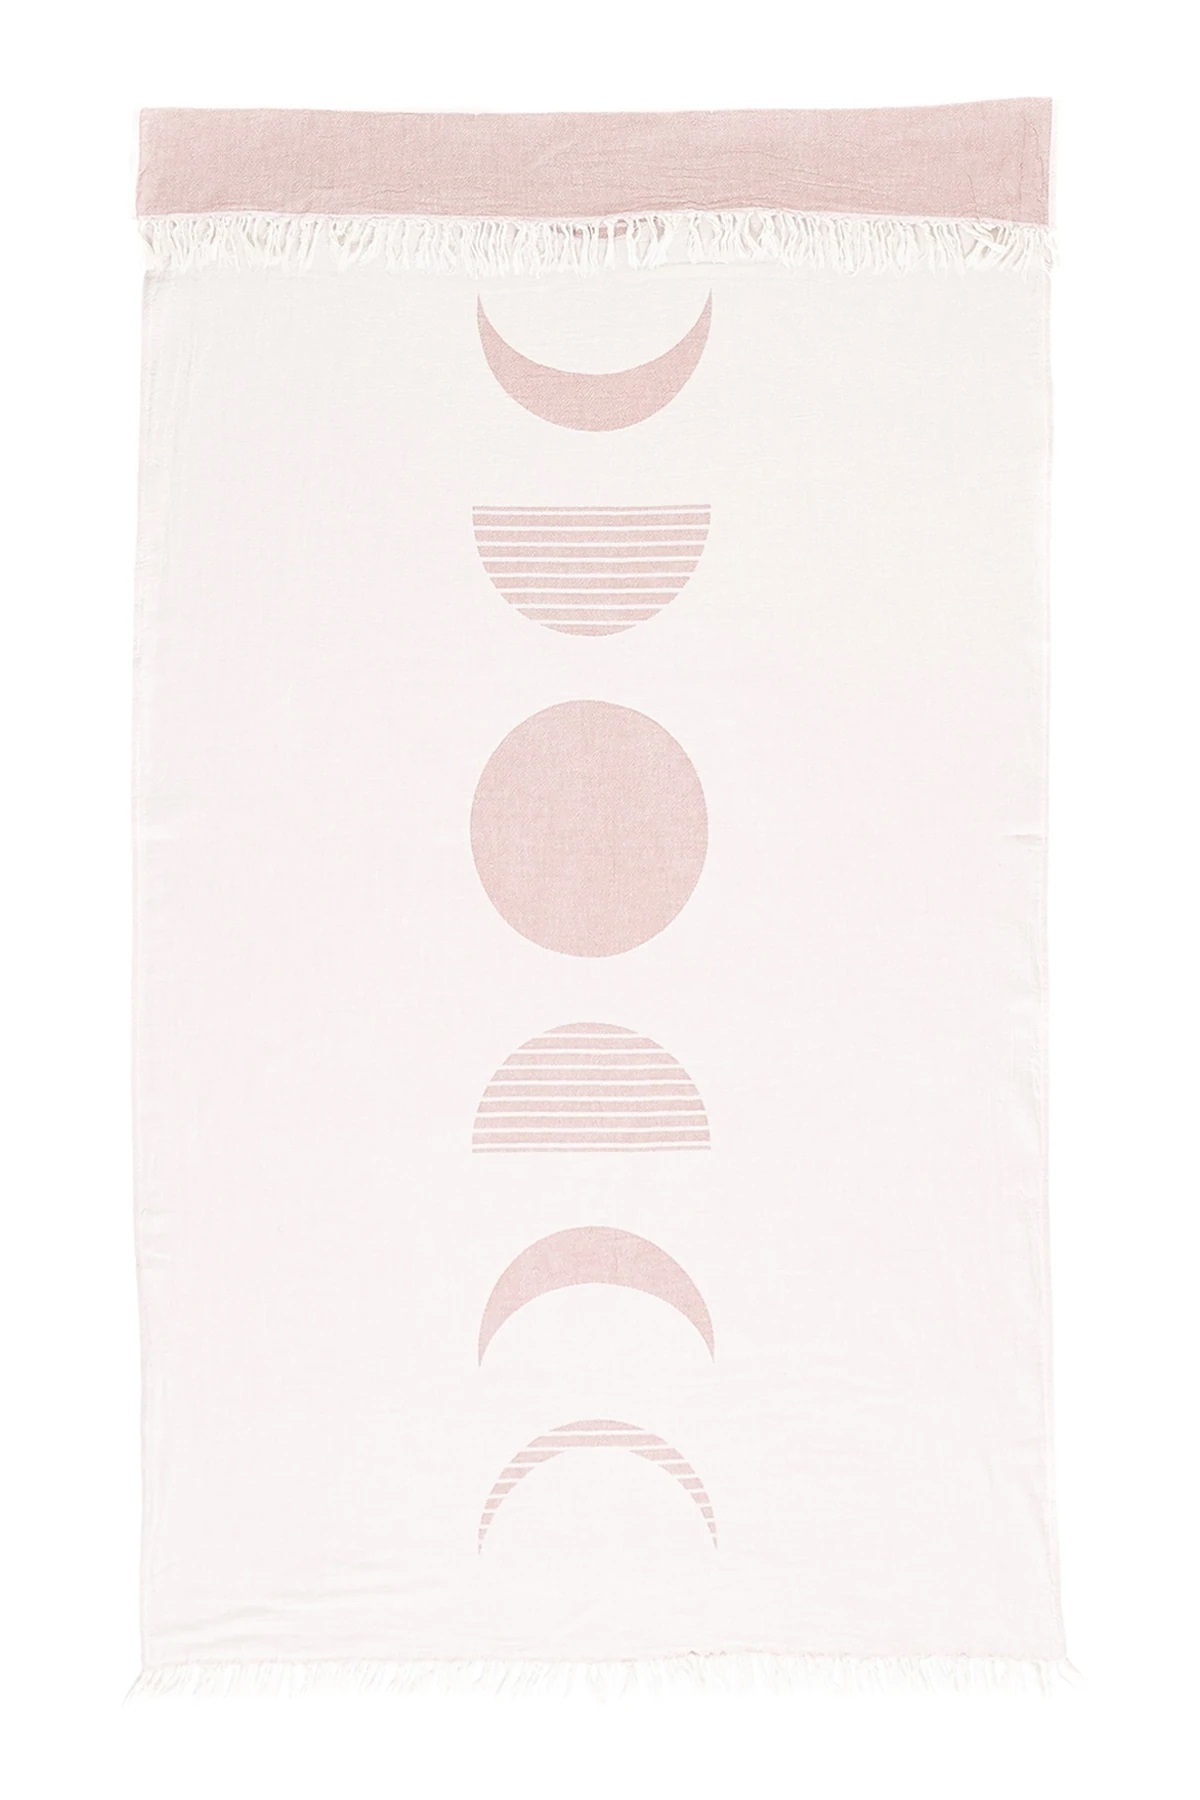 Tofino Towel Co Tofino Towel -The Moonphase Towel